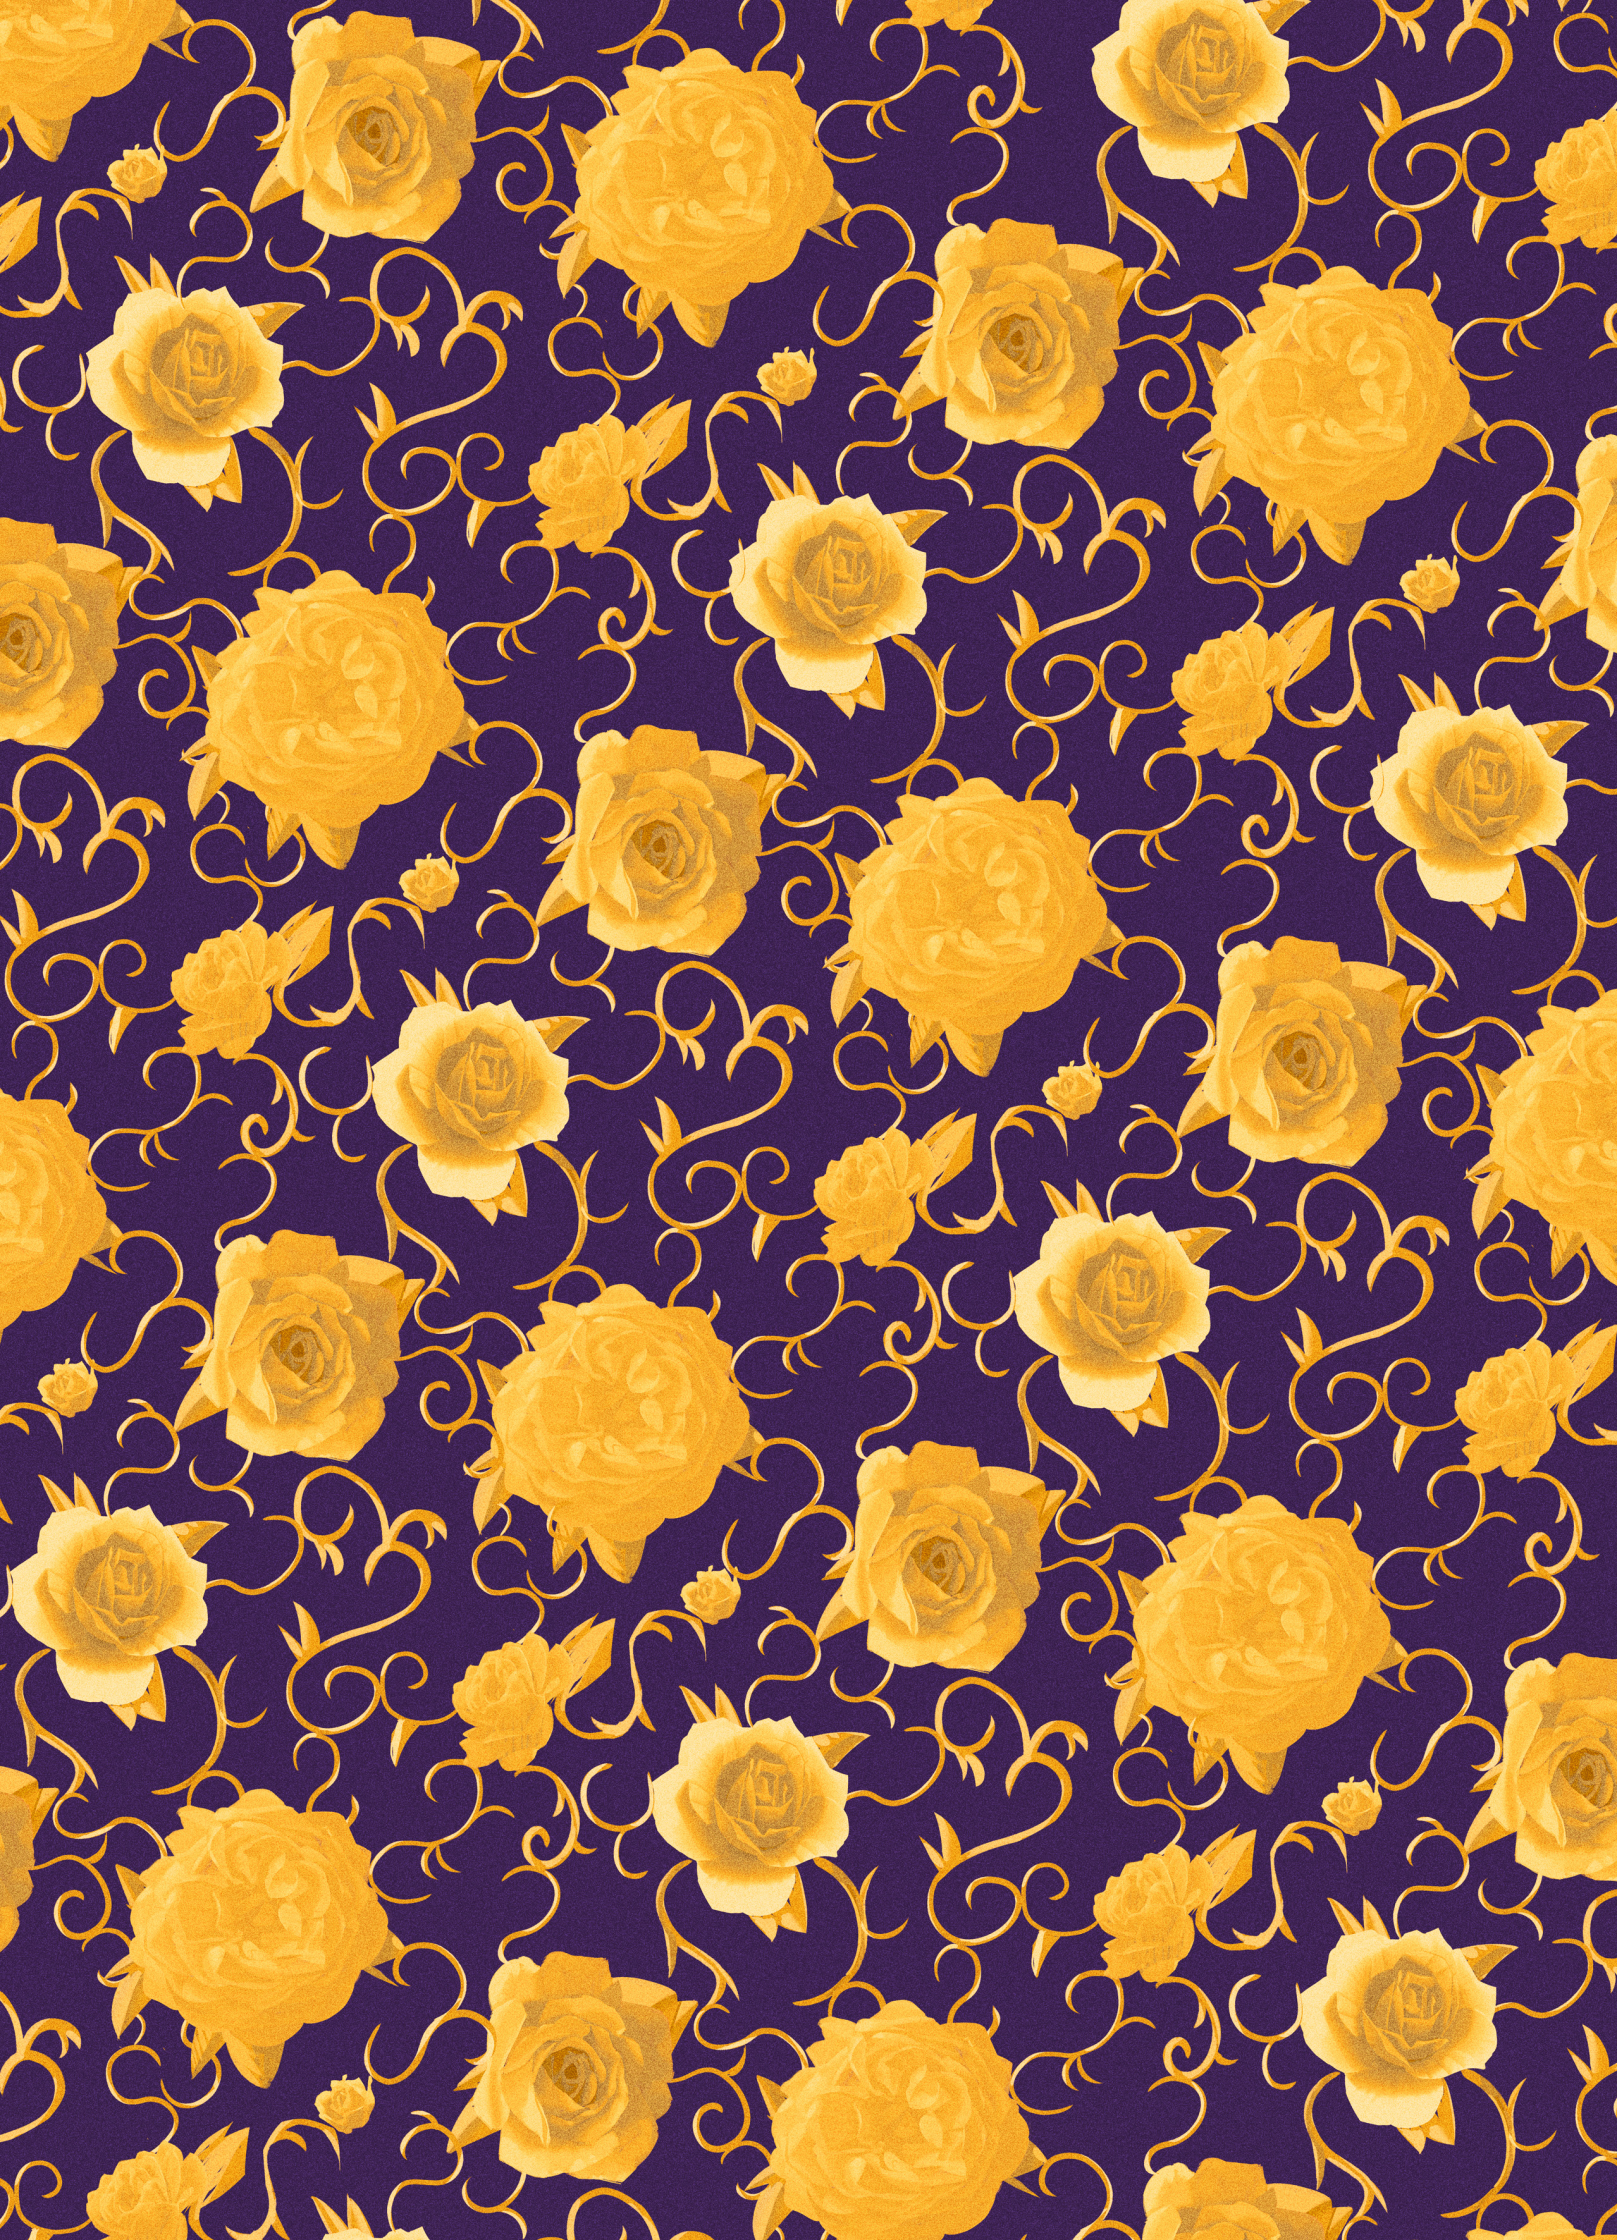 ul206_gold_floral_pattern.jpg